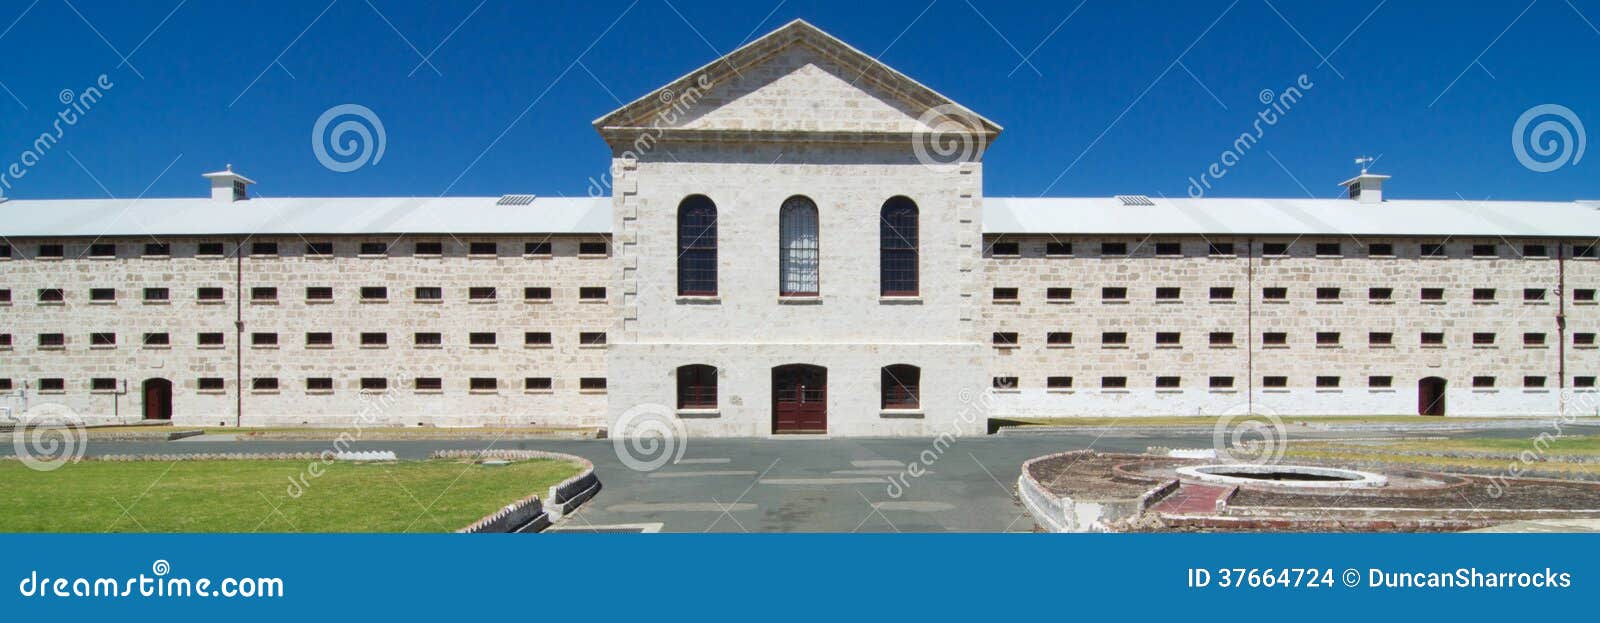 fremantle prison, western australia